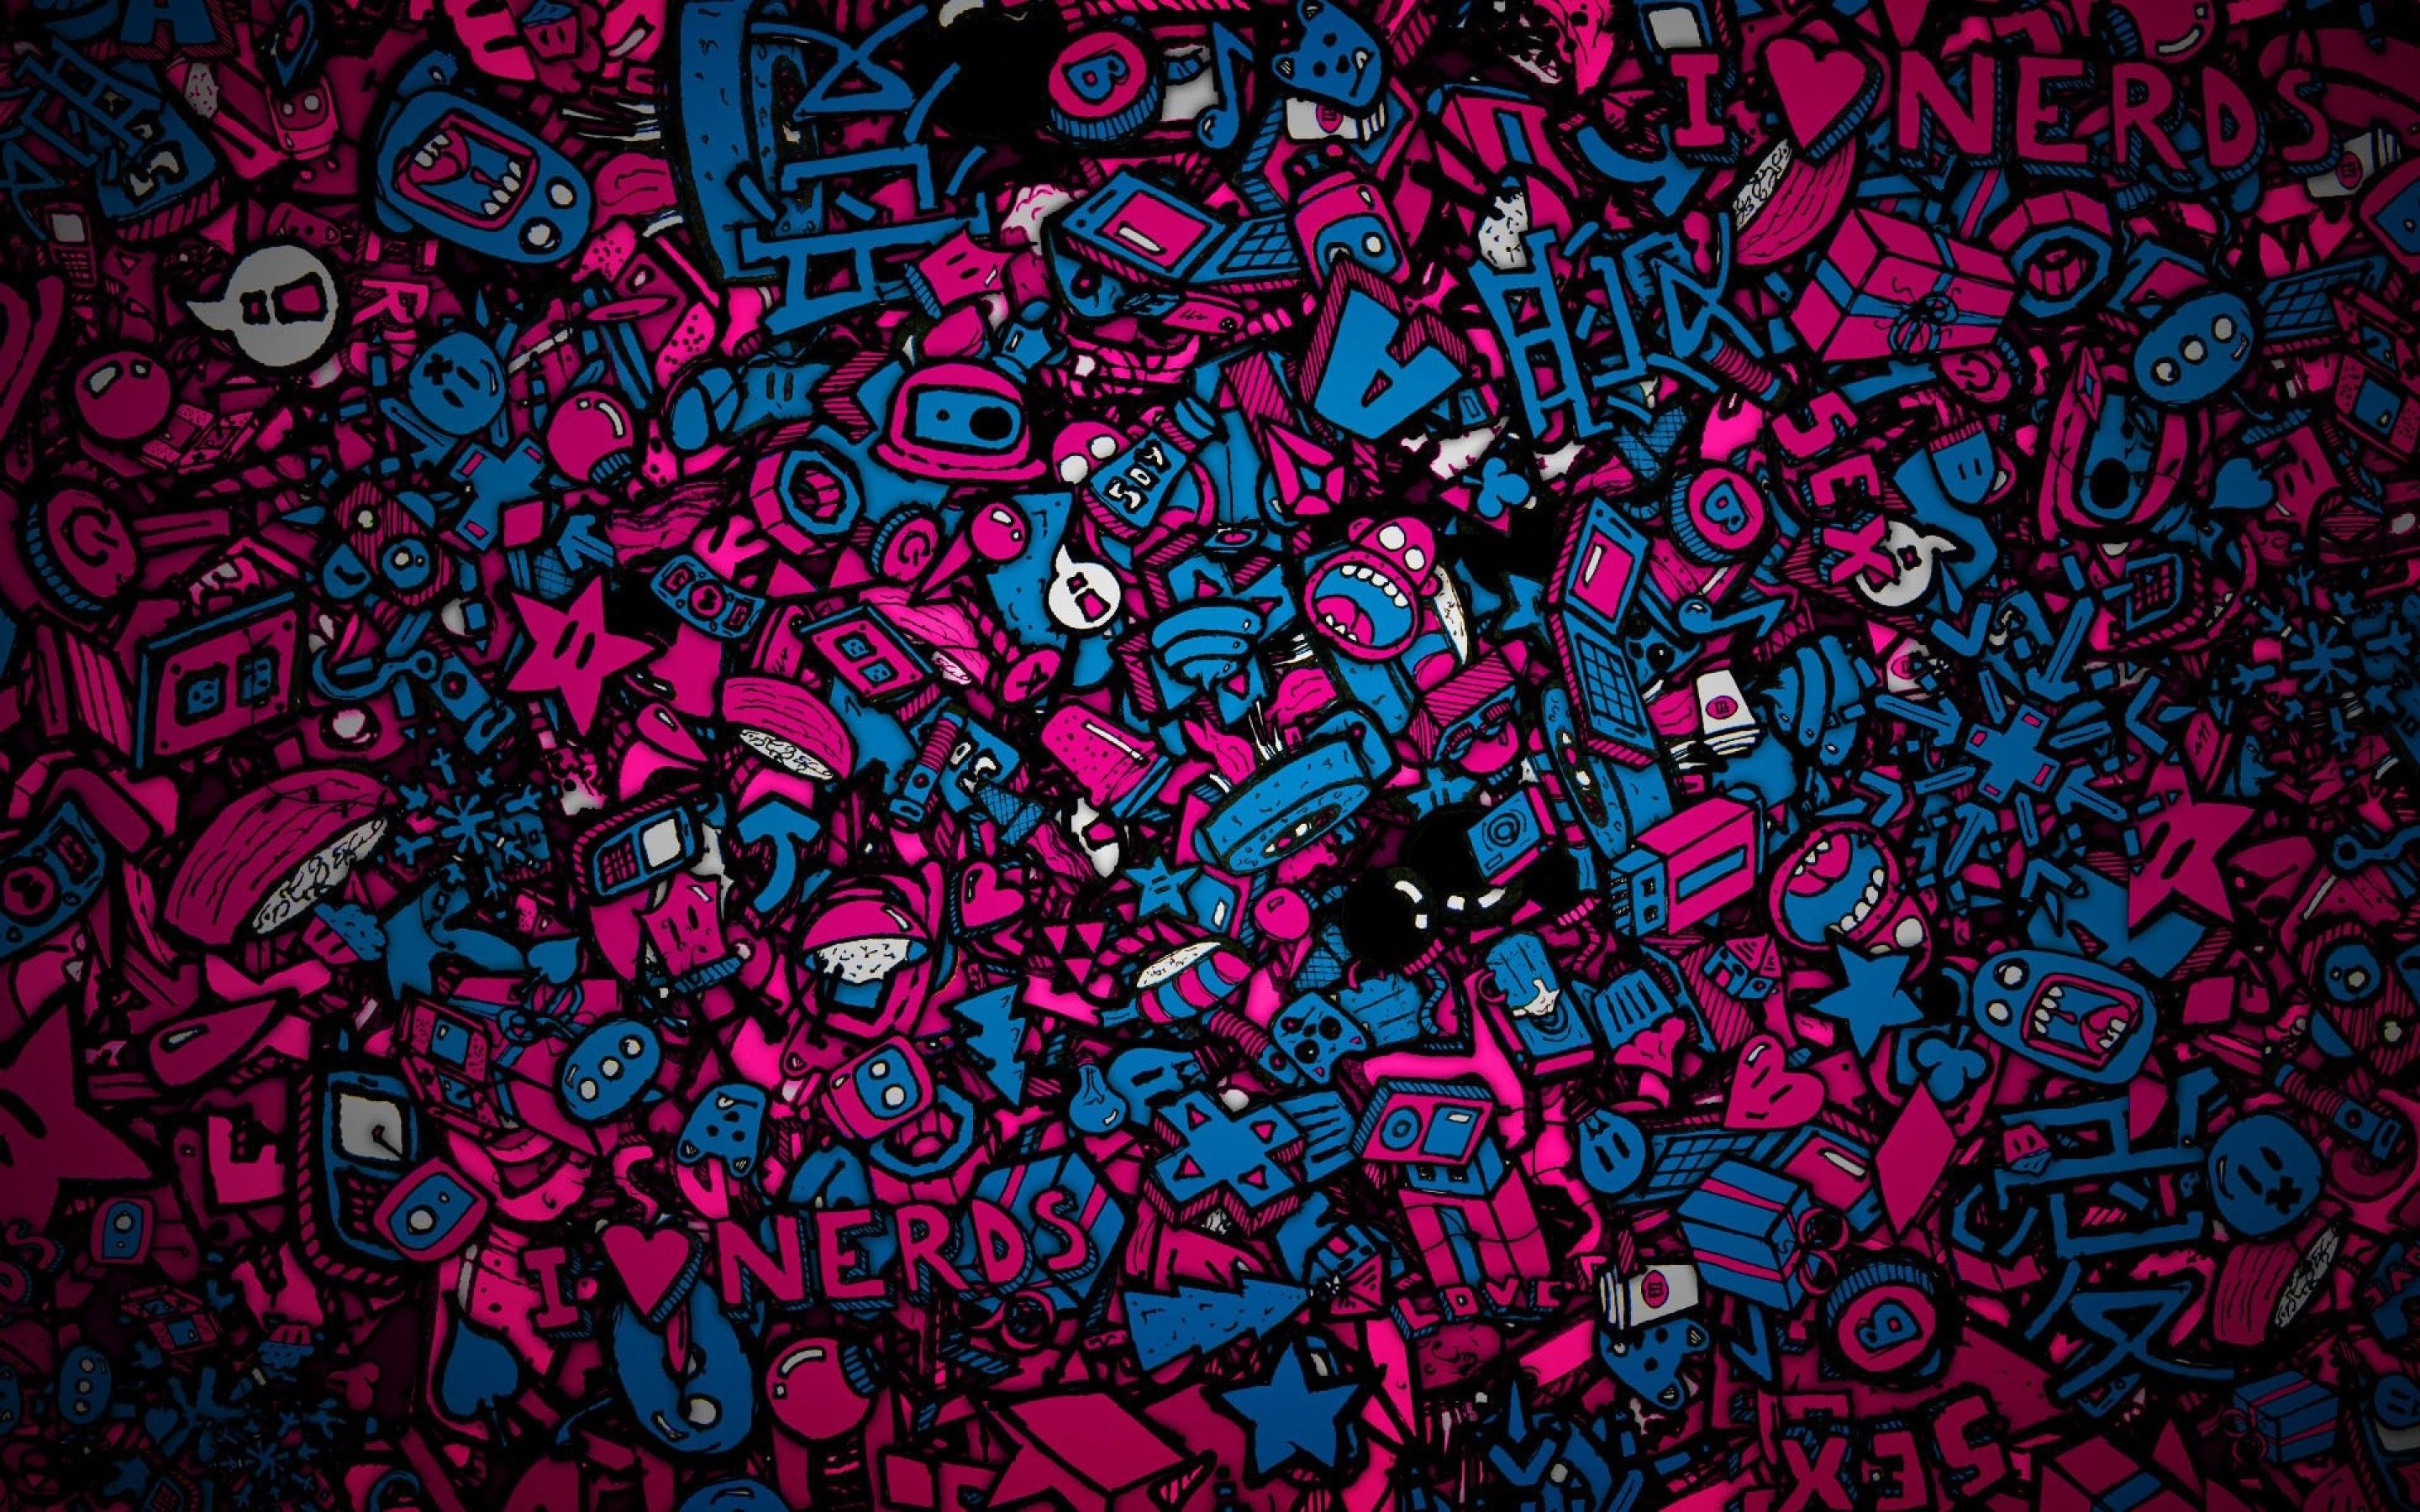 2880x1800, Colorful Love Nerds Wallpaper Hd - Abstract Wallpapers 4k Ultra Hd - HD Wallpaper 